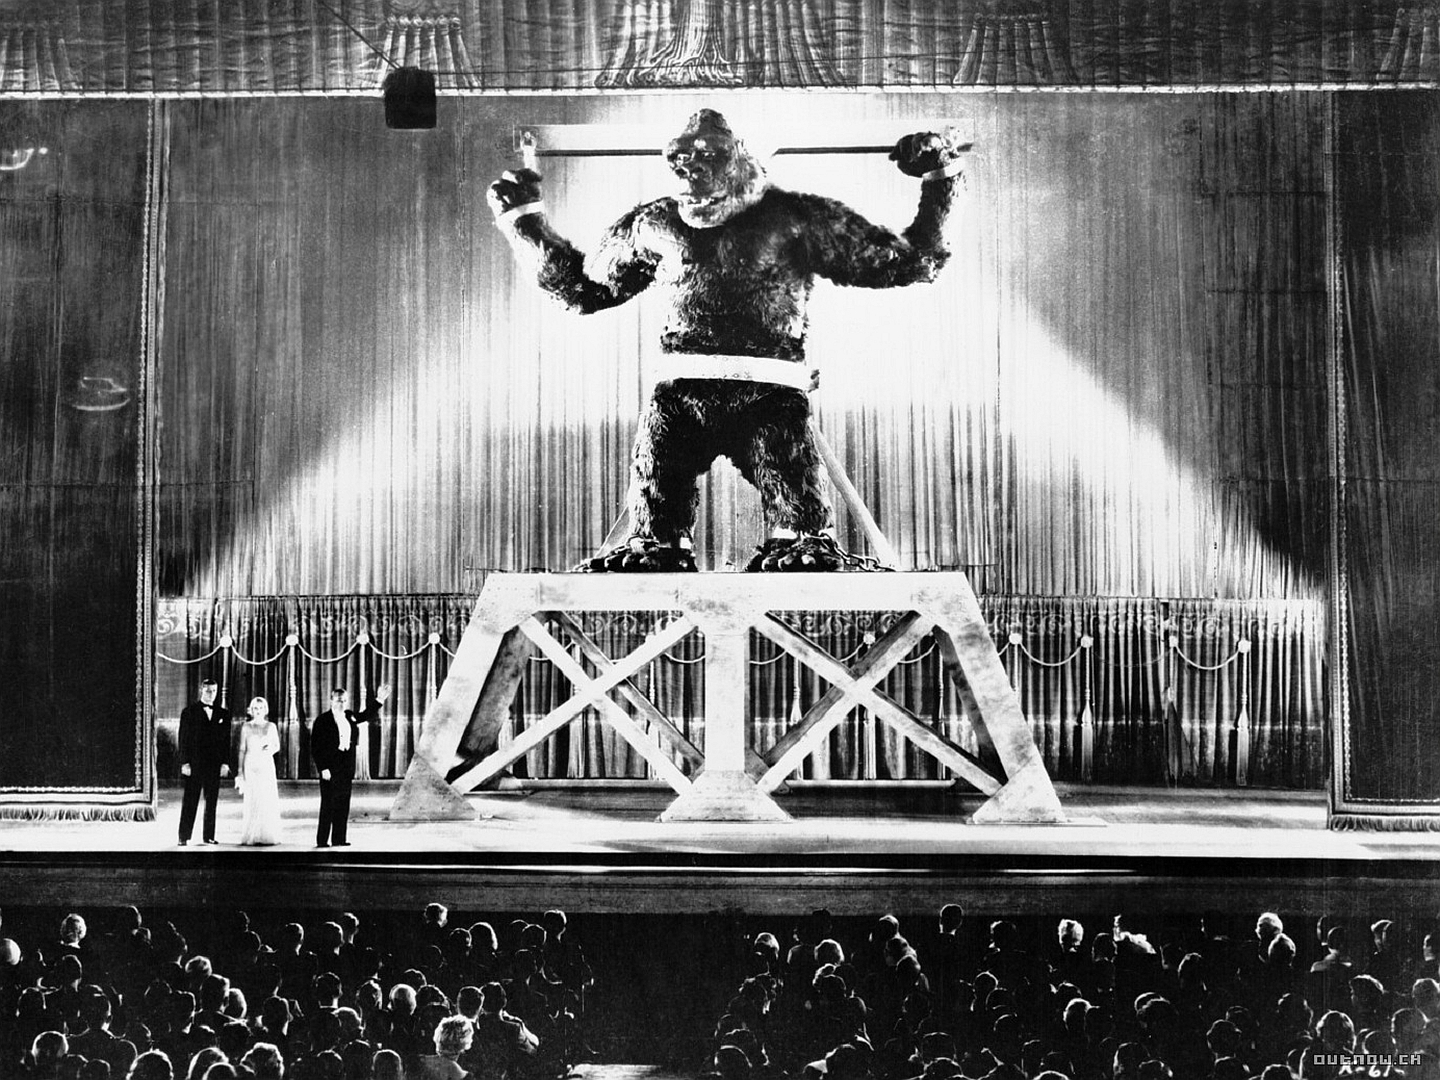 Movie King Kong (1933) HD Wallpaper | Background Image